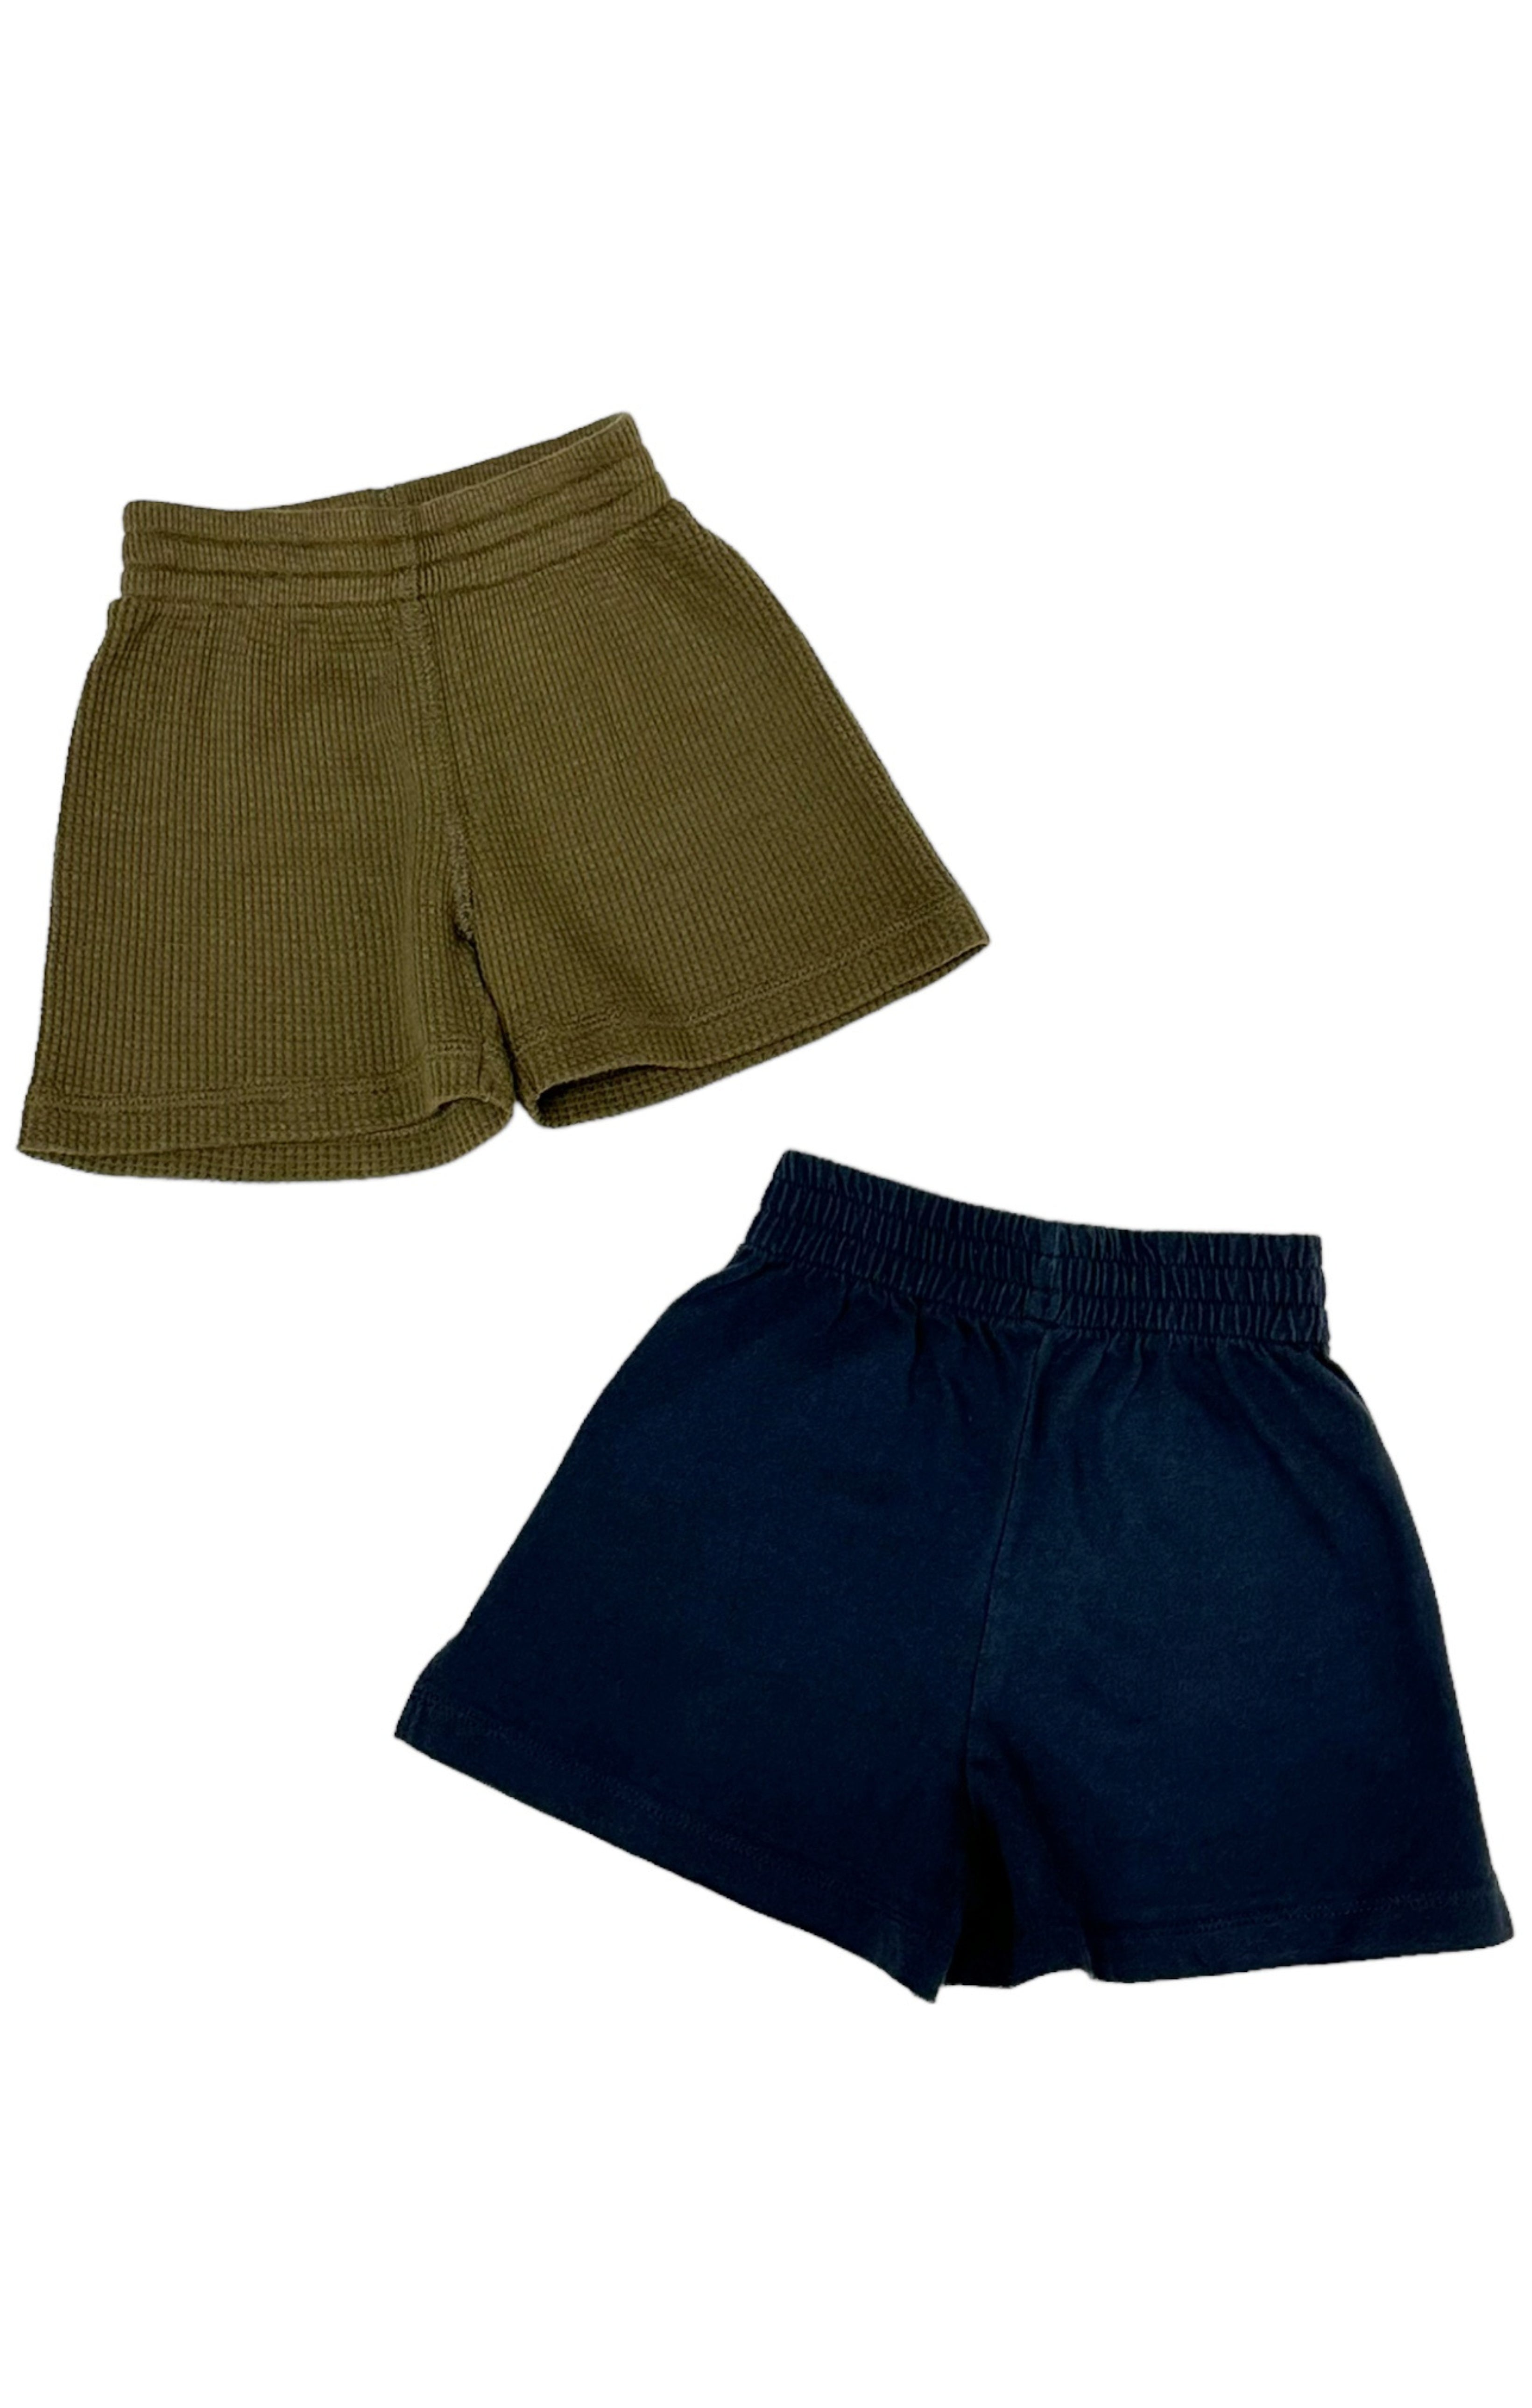 Shorts Bundle Size: Black - No size tags, fit like 6 Years Olive - No size tags, fit like 5-6 Years